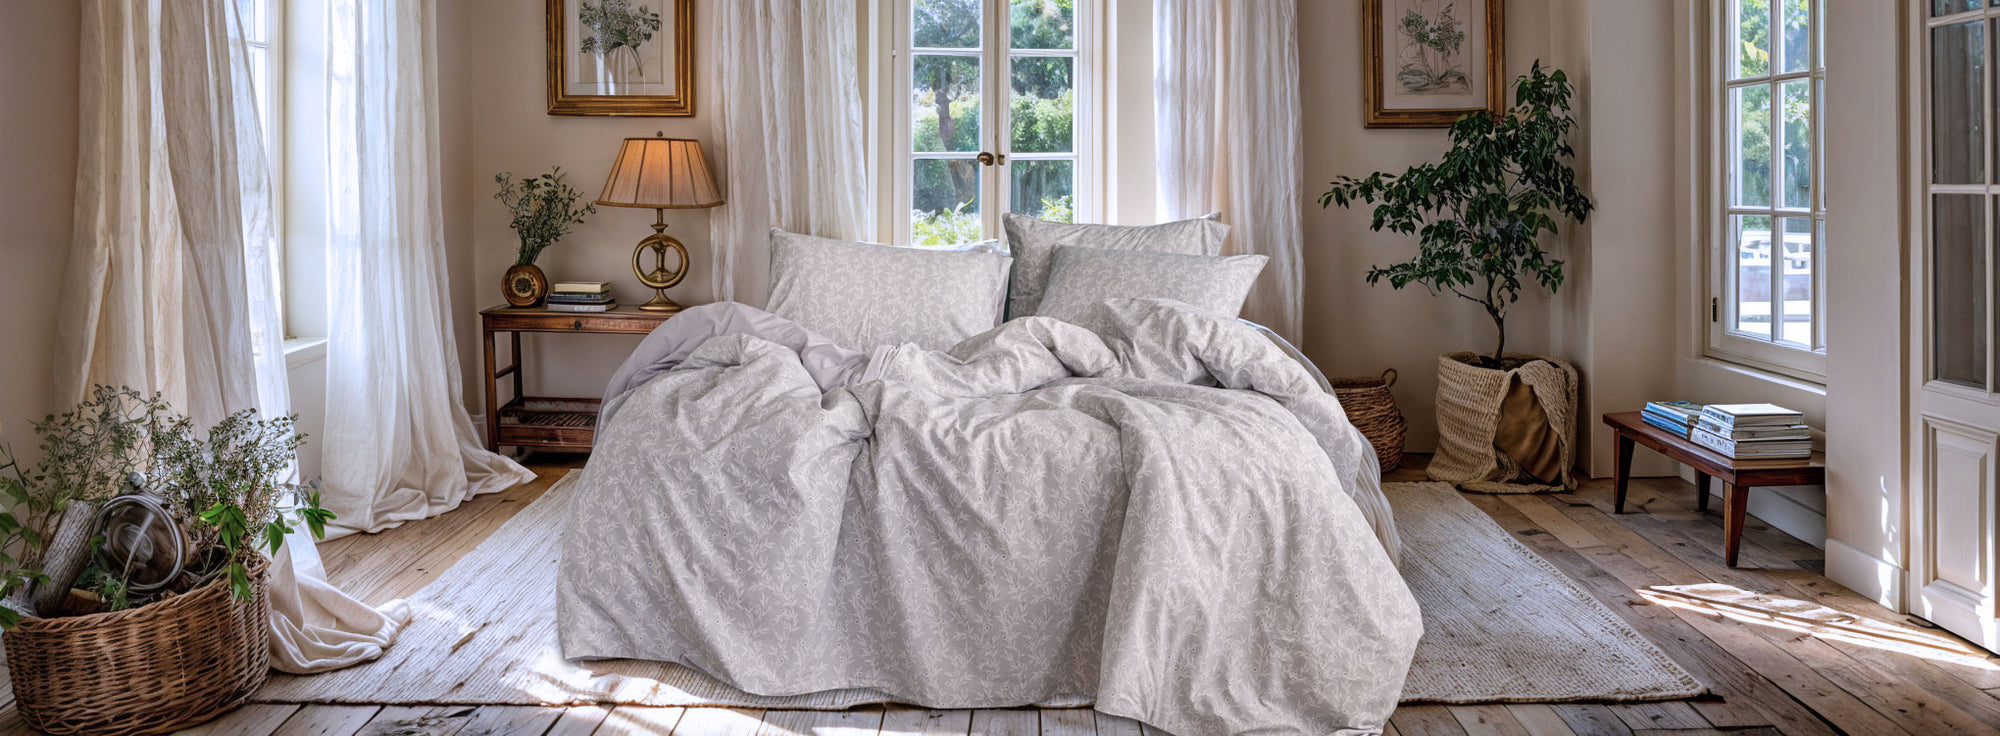 grey floral duvet cover pure cotton percale bedding set